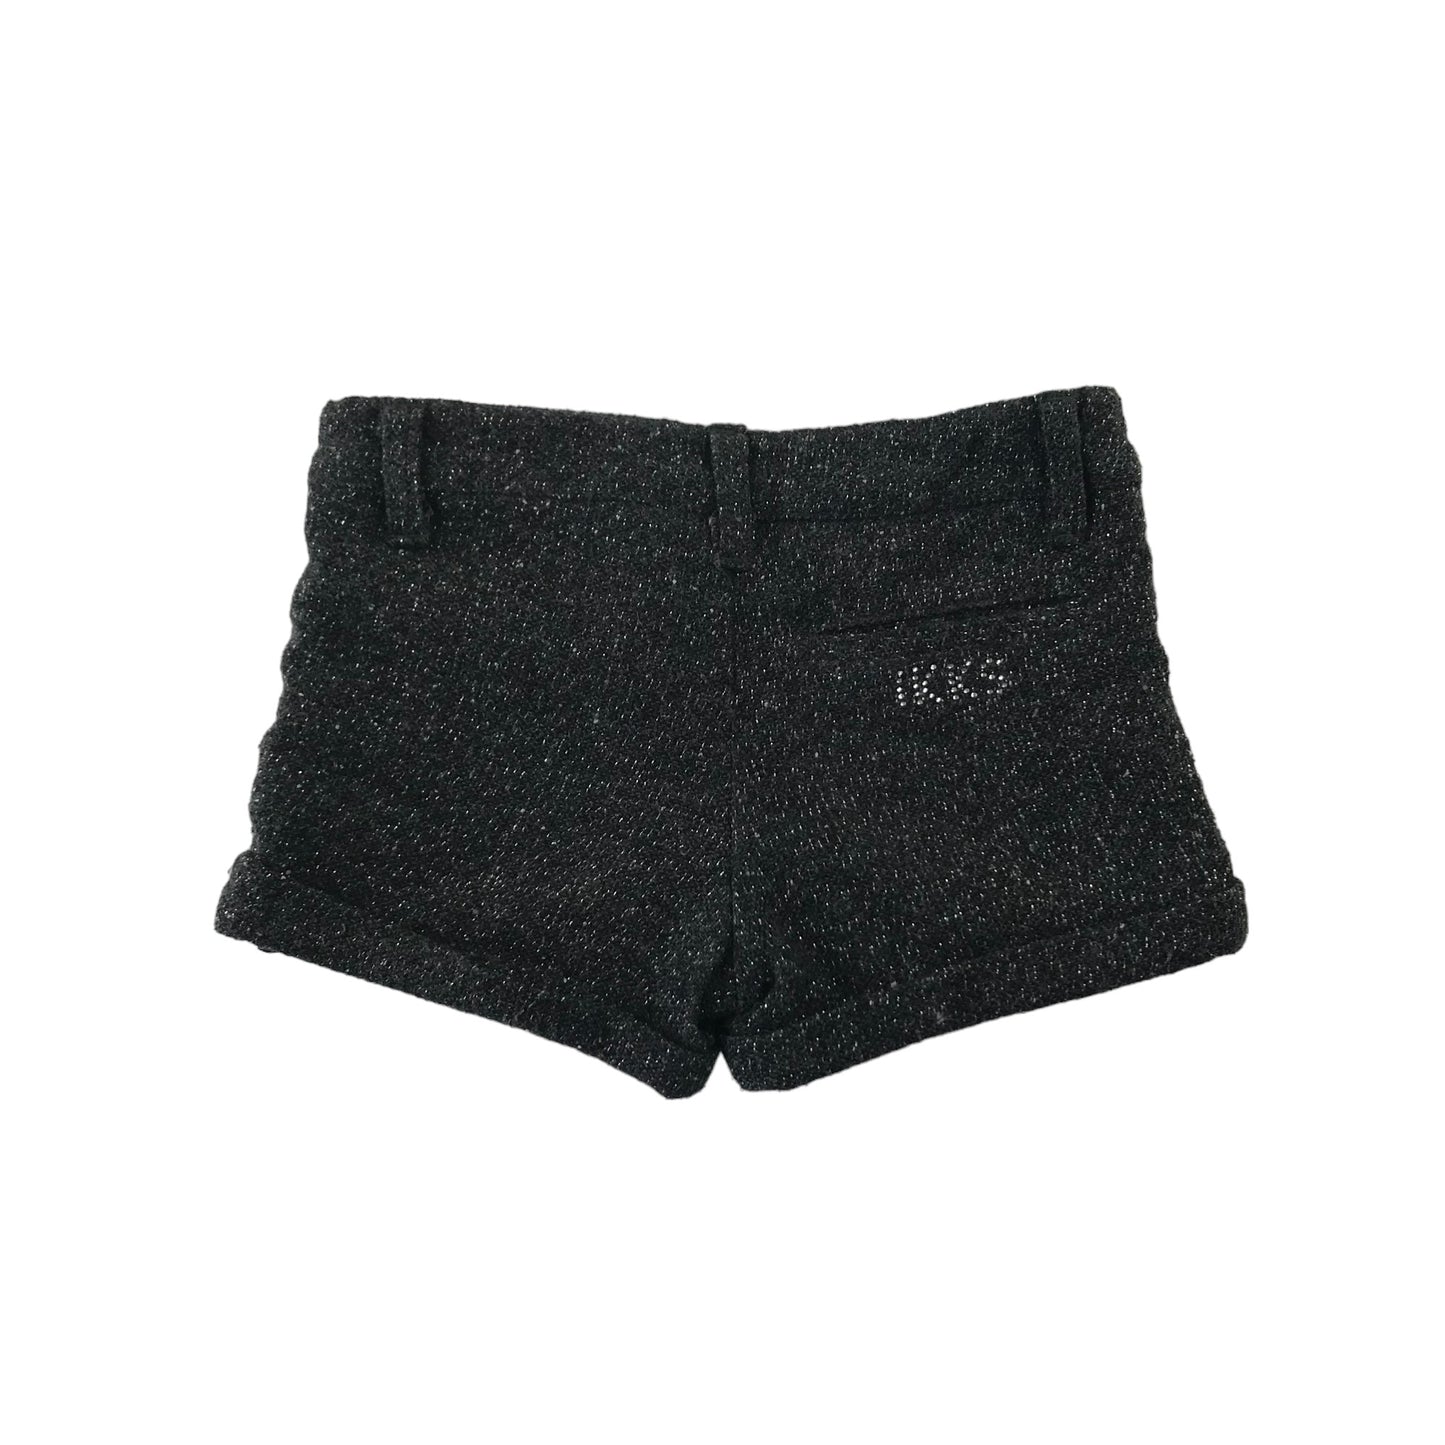 IKKS Shorts Age 5 Dark Grey with Glittery Design